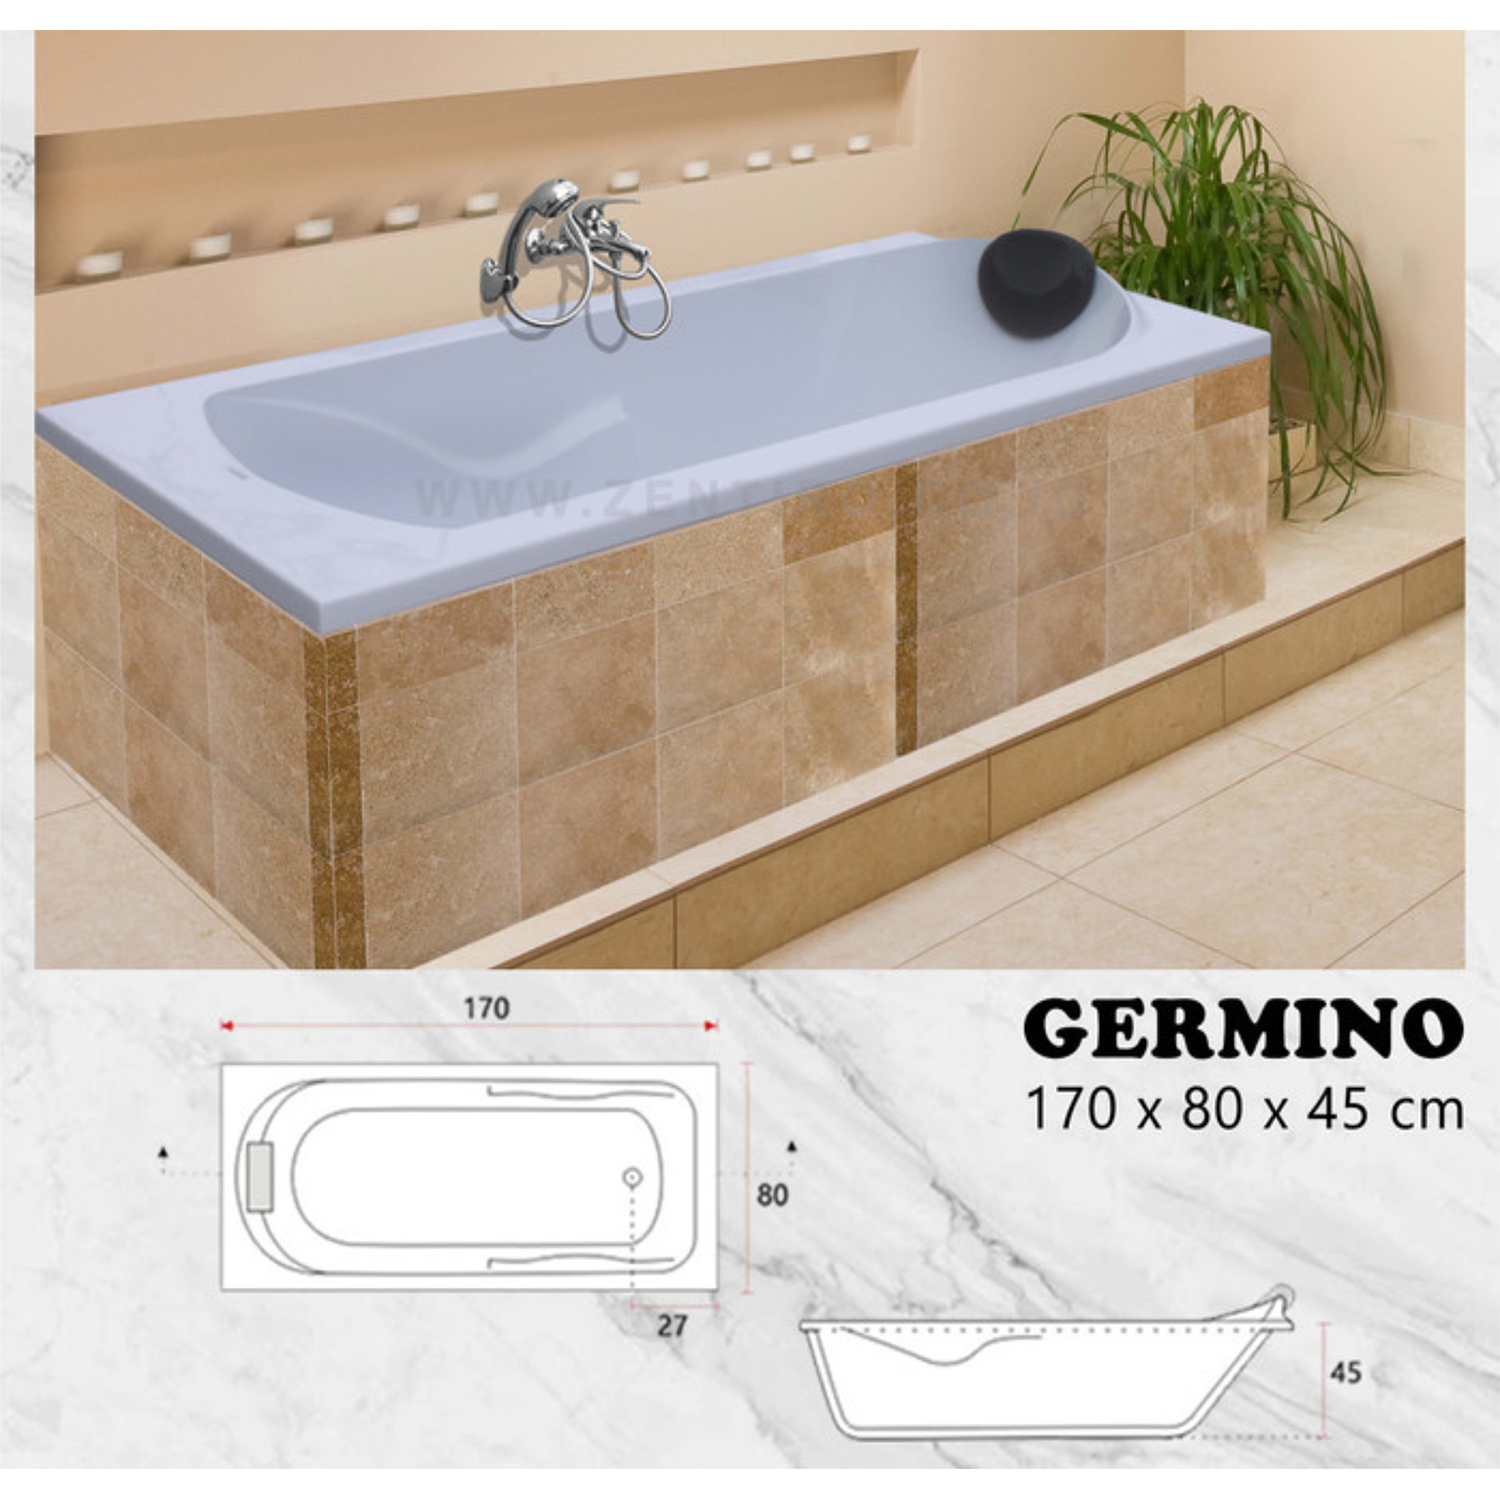 ZENTIRO Long Germino Bathtub Marble Complete Set